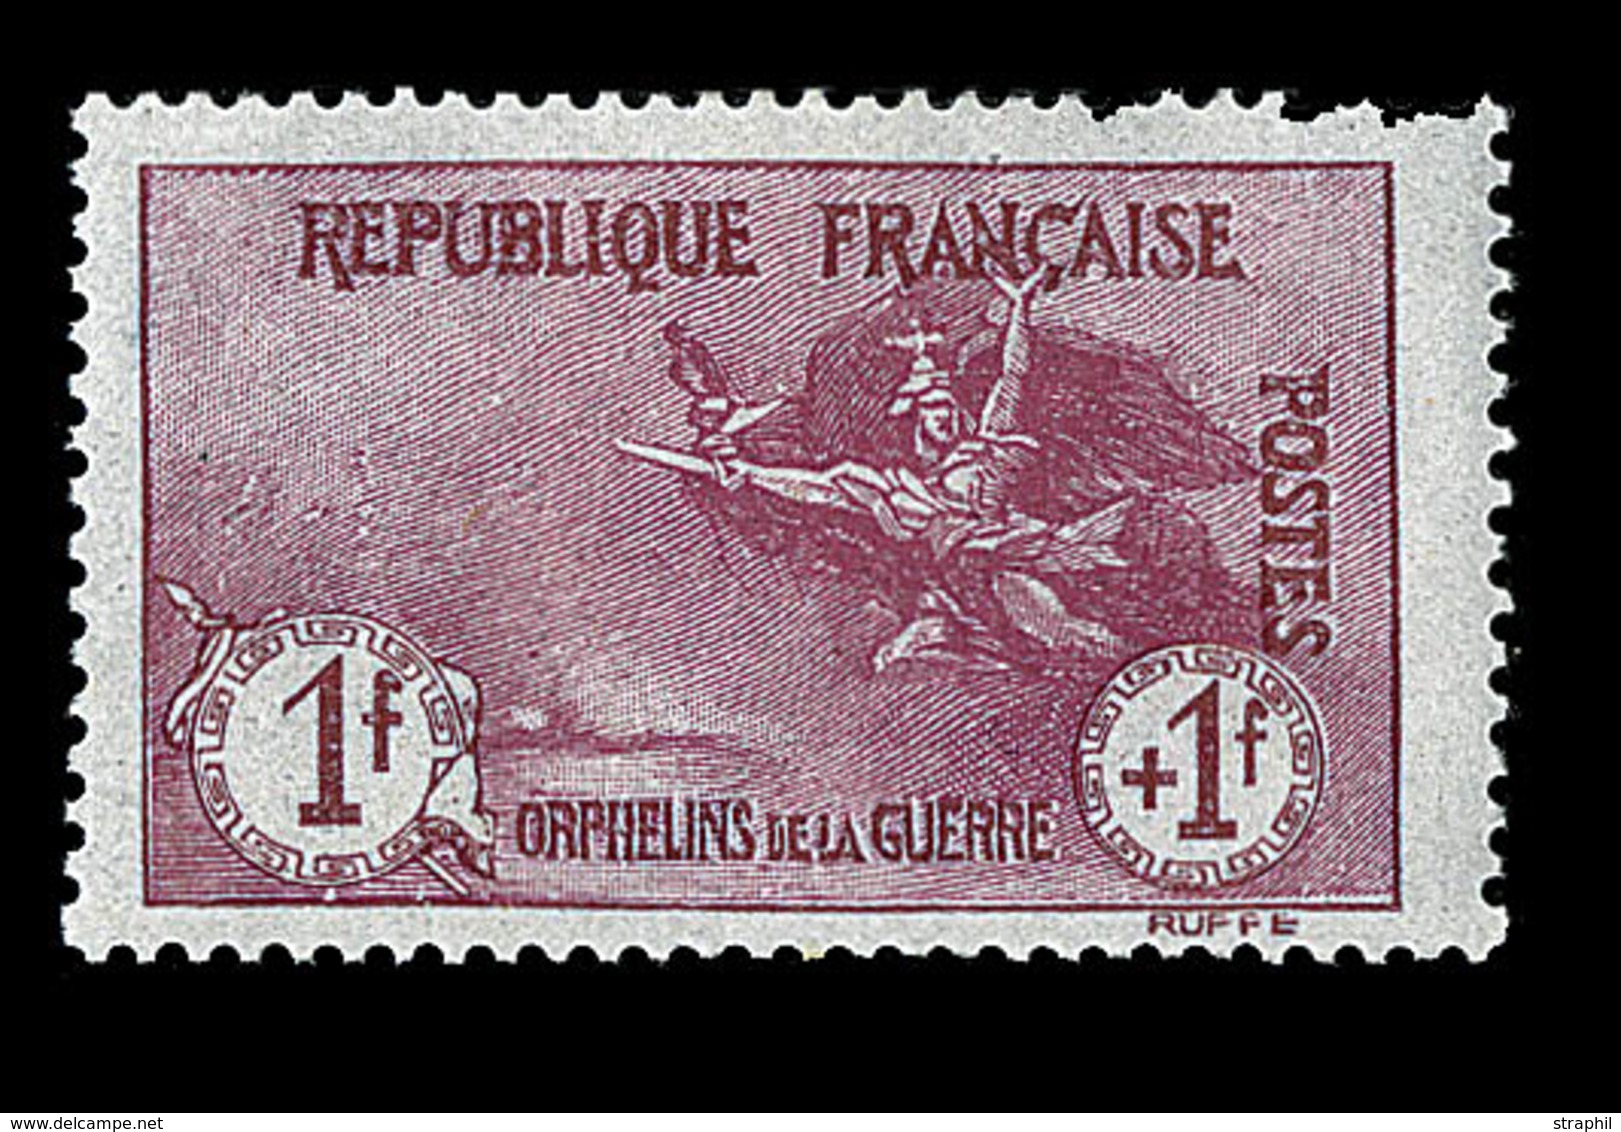 * N°154 - Charnière Large - TB - Unused Stamps